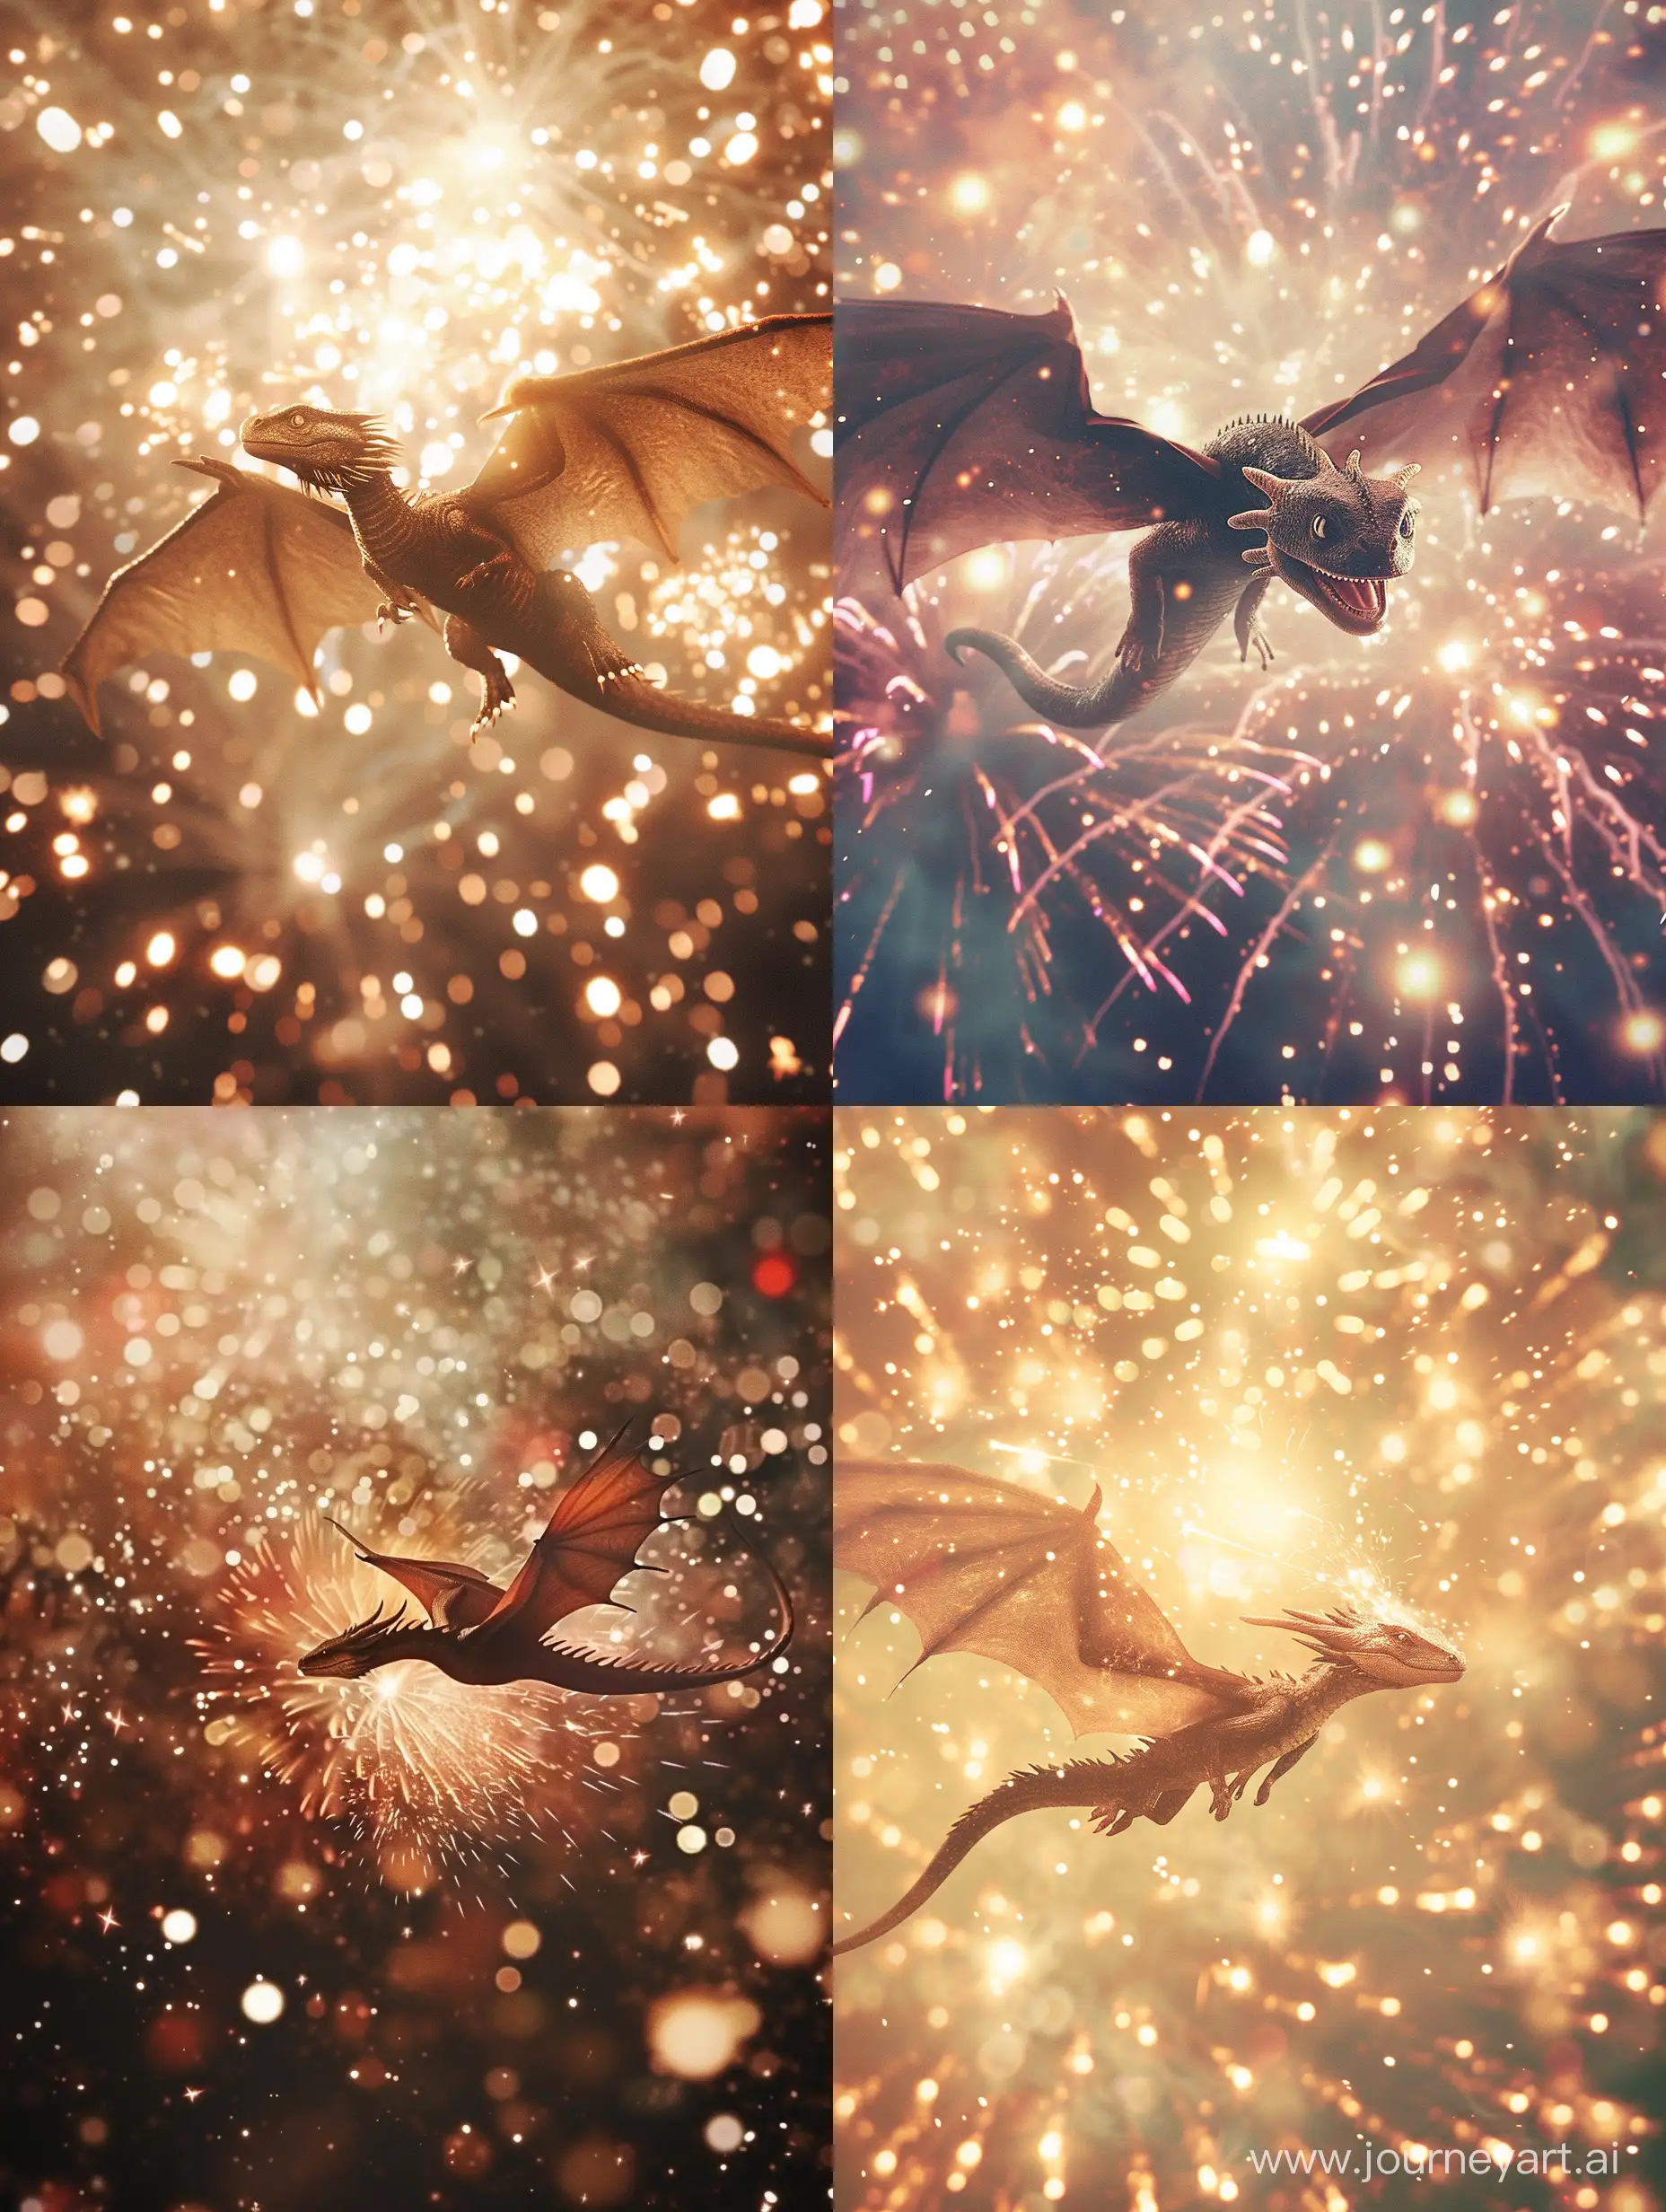 Dragon-Soaring-Amidst-Dazzling-Fireworks-Display